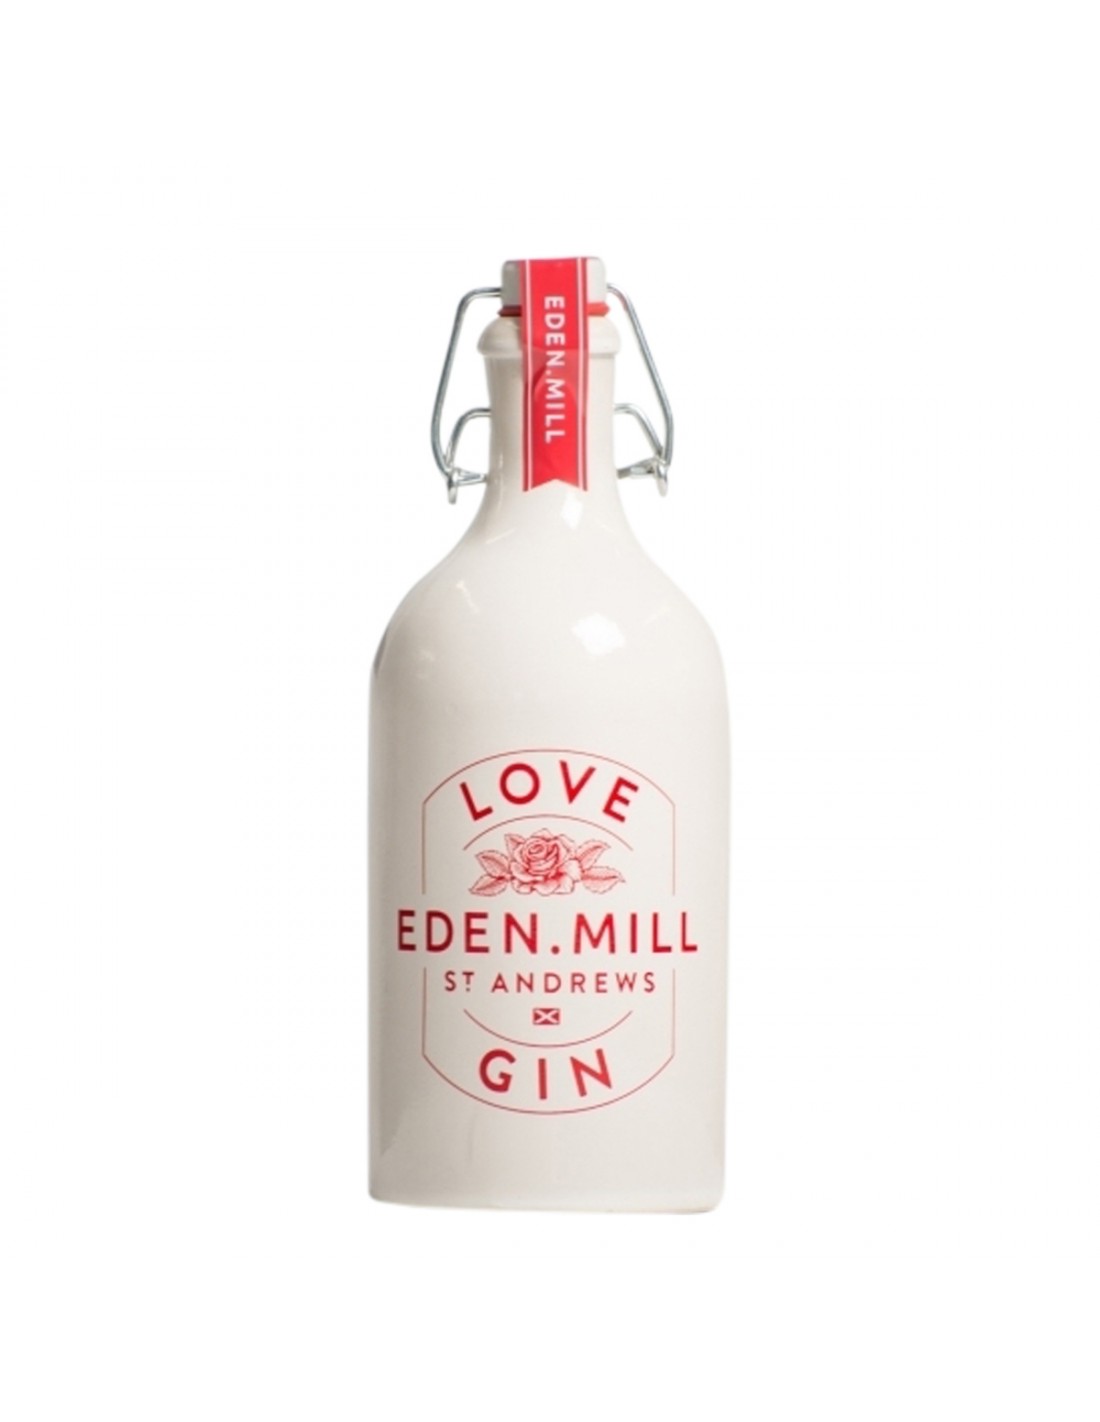 Gin Eden Mill Love 42% alc., 0.7L, Scotia alcooldiscount.ro